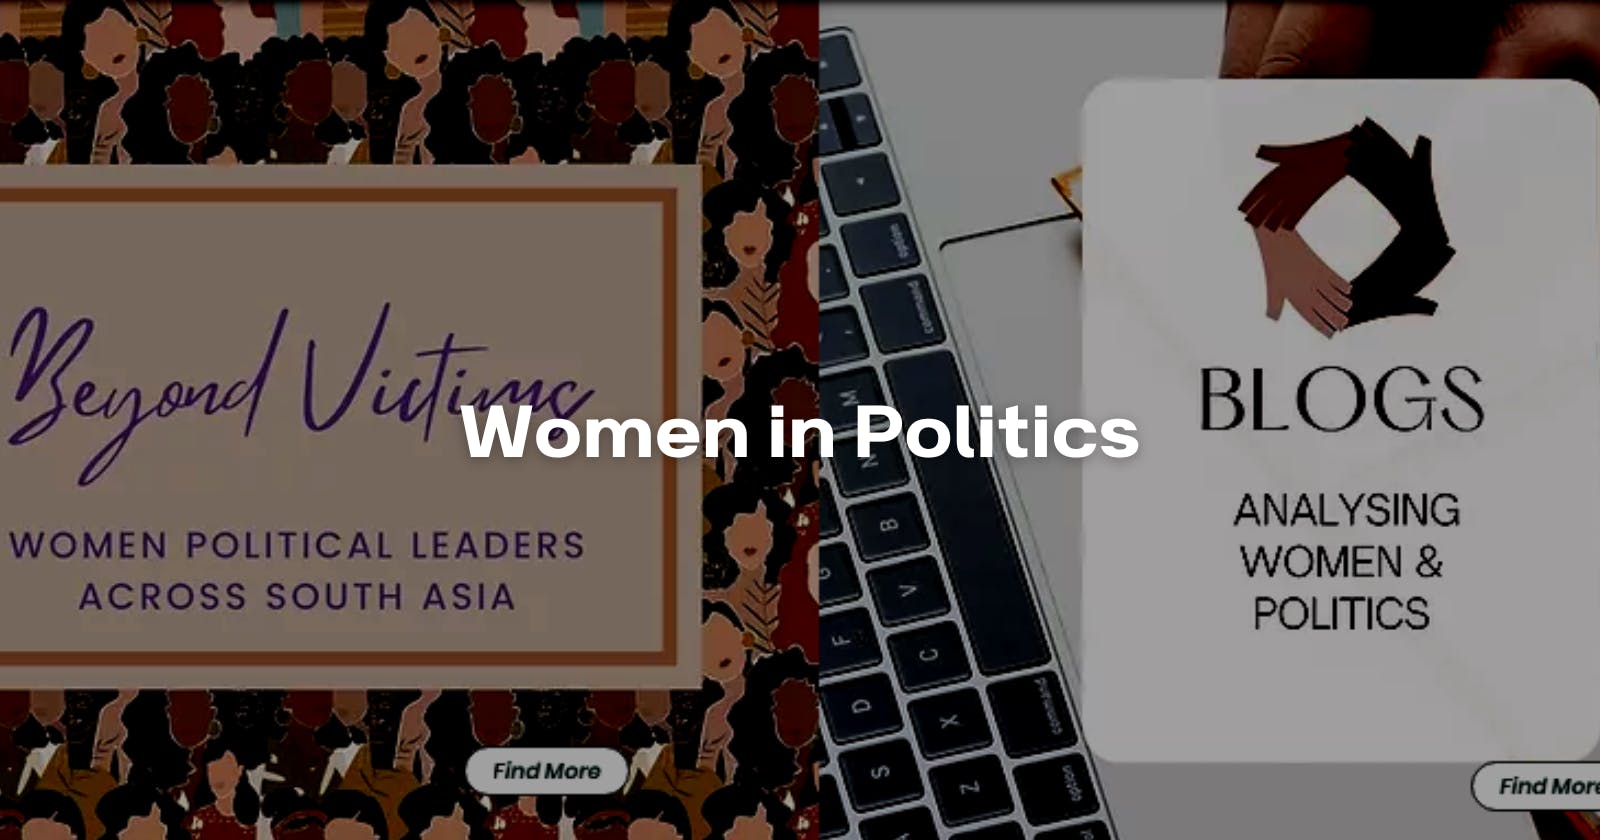 "Women in Politics" - A Hackathon Winning Solution